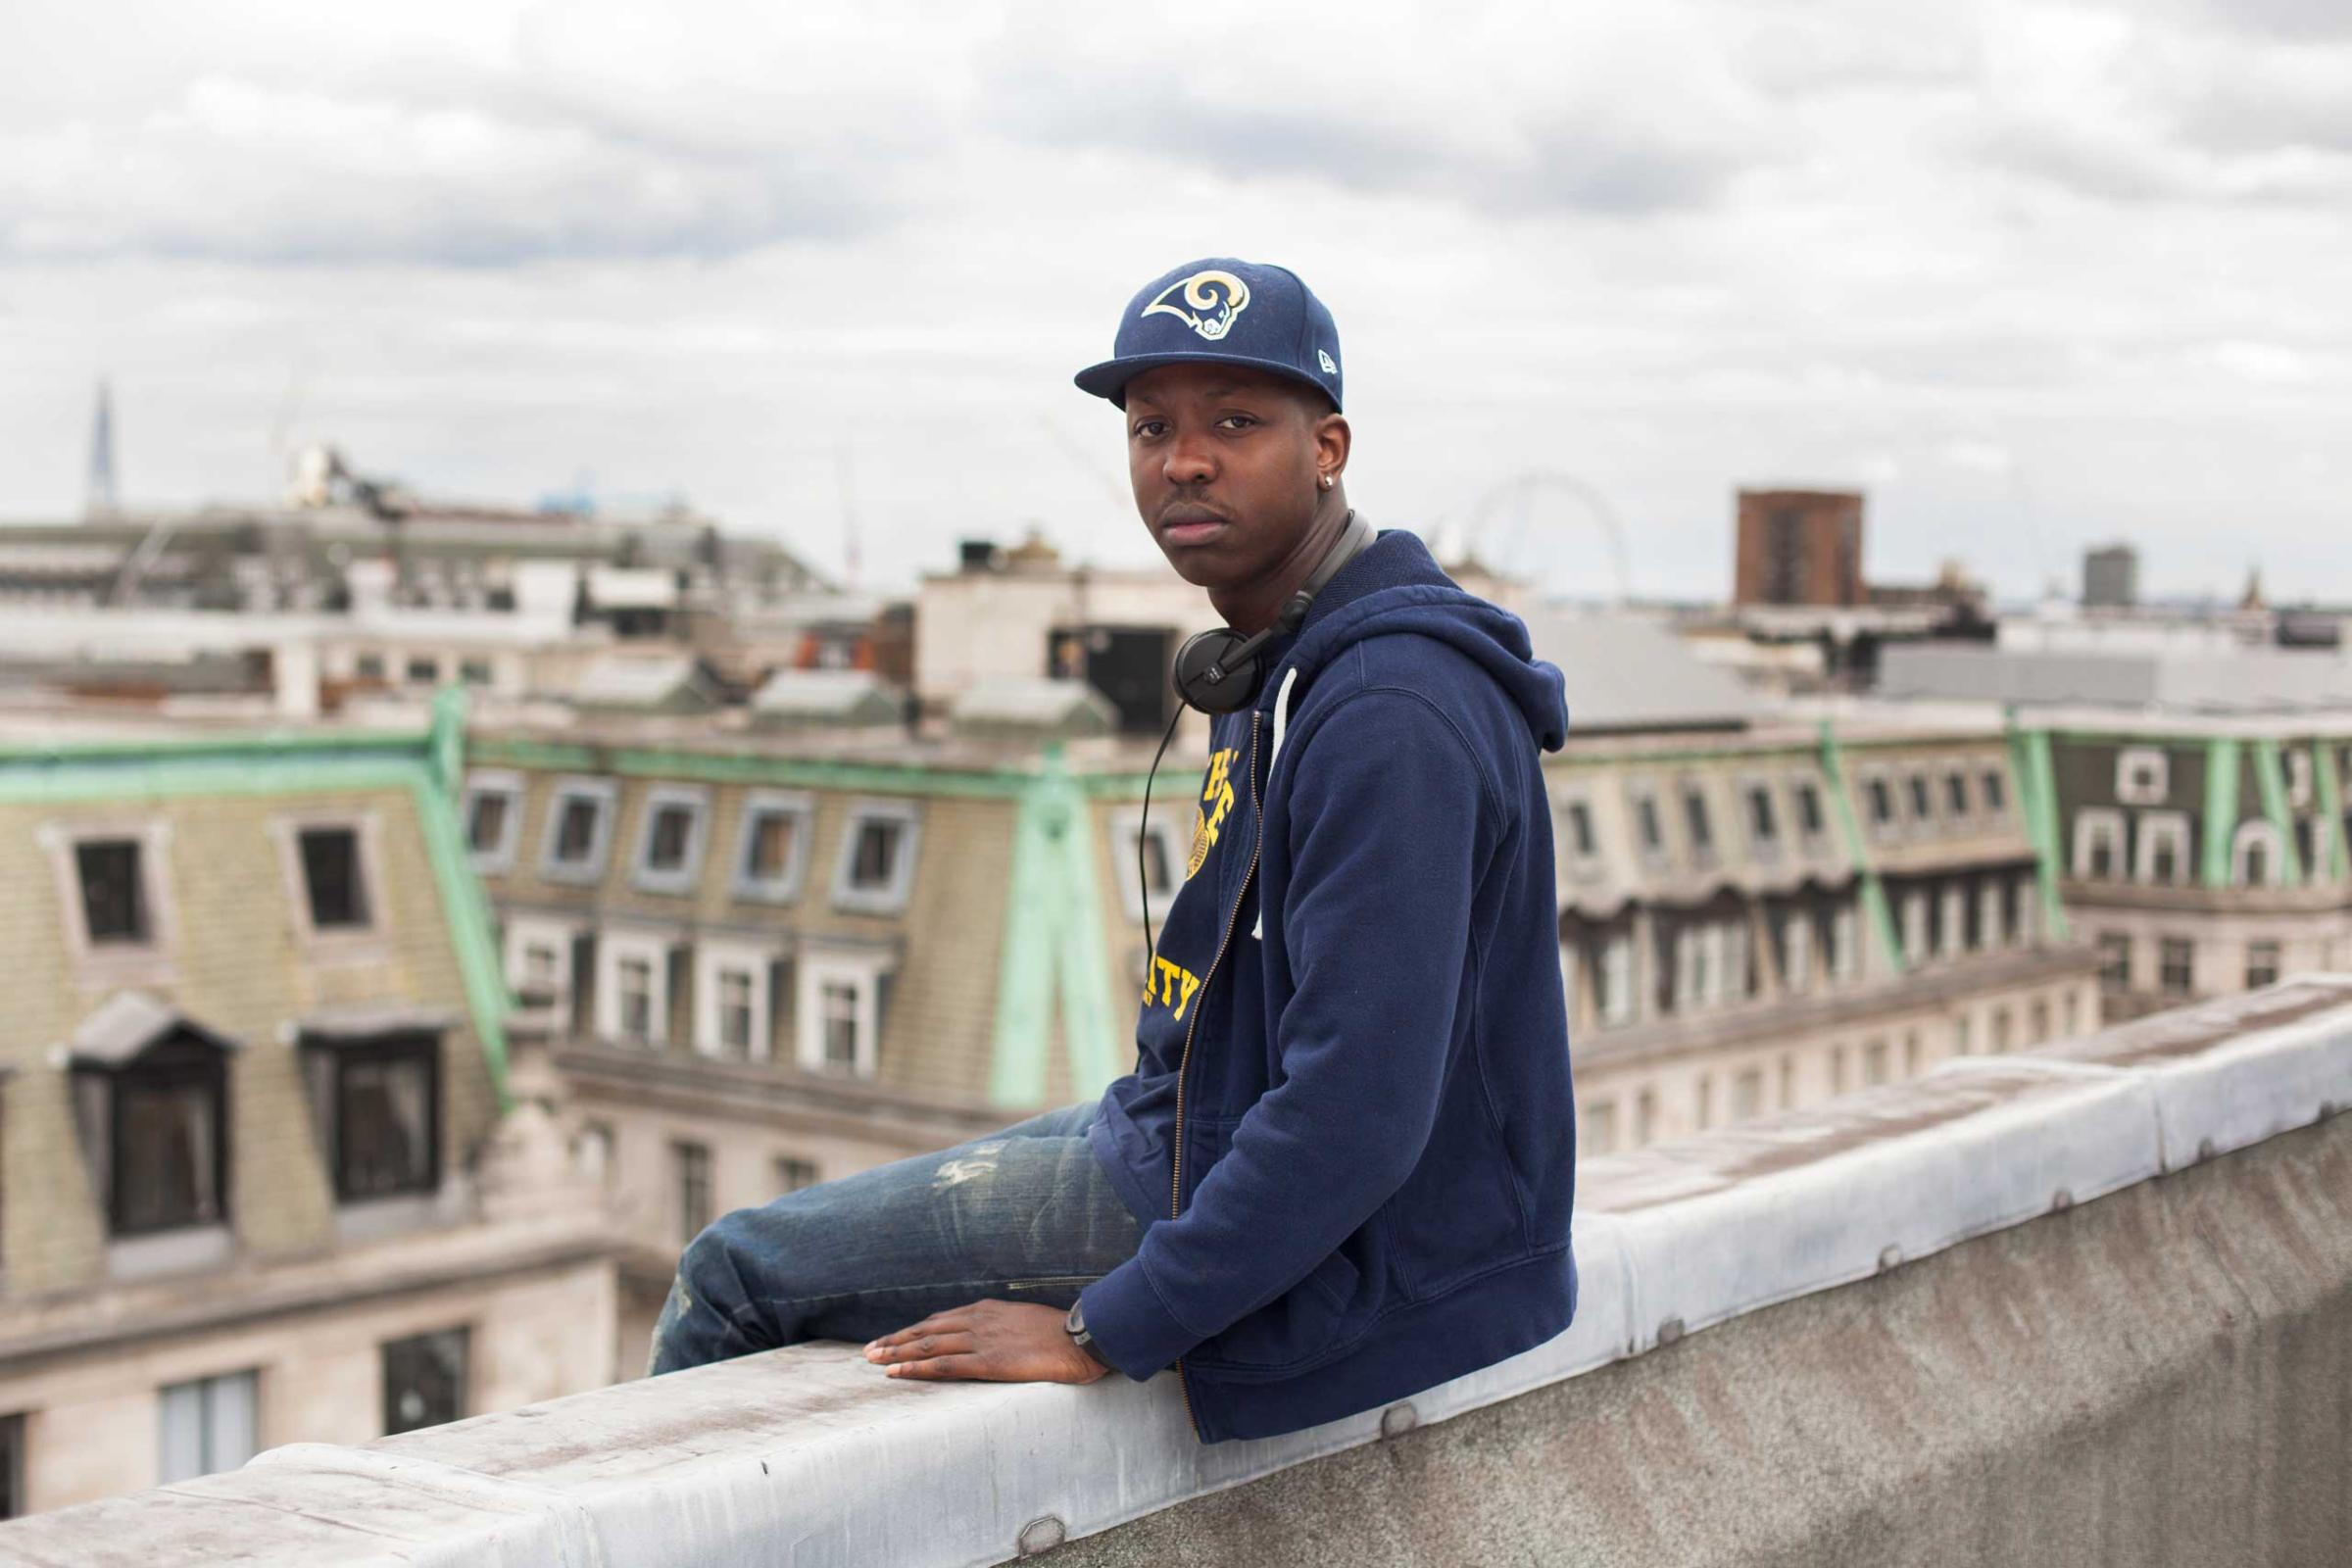 Self-made music video mogul Jamal Edwards in London on Aug. 21, 2014